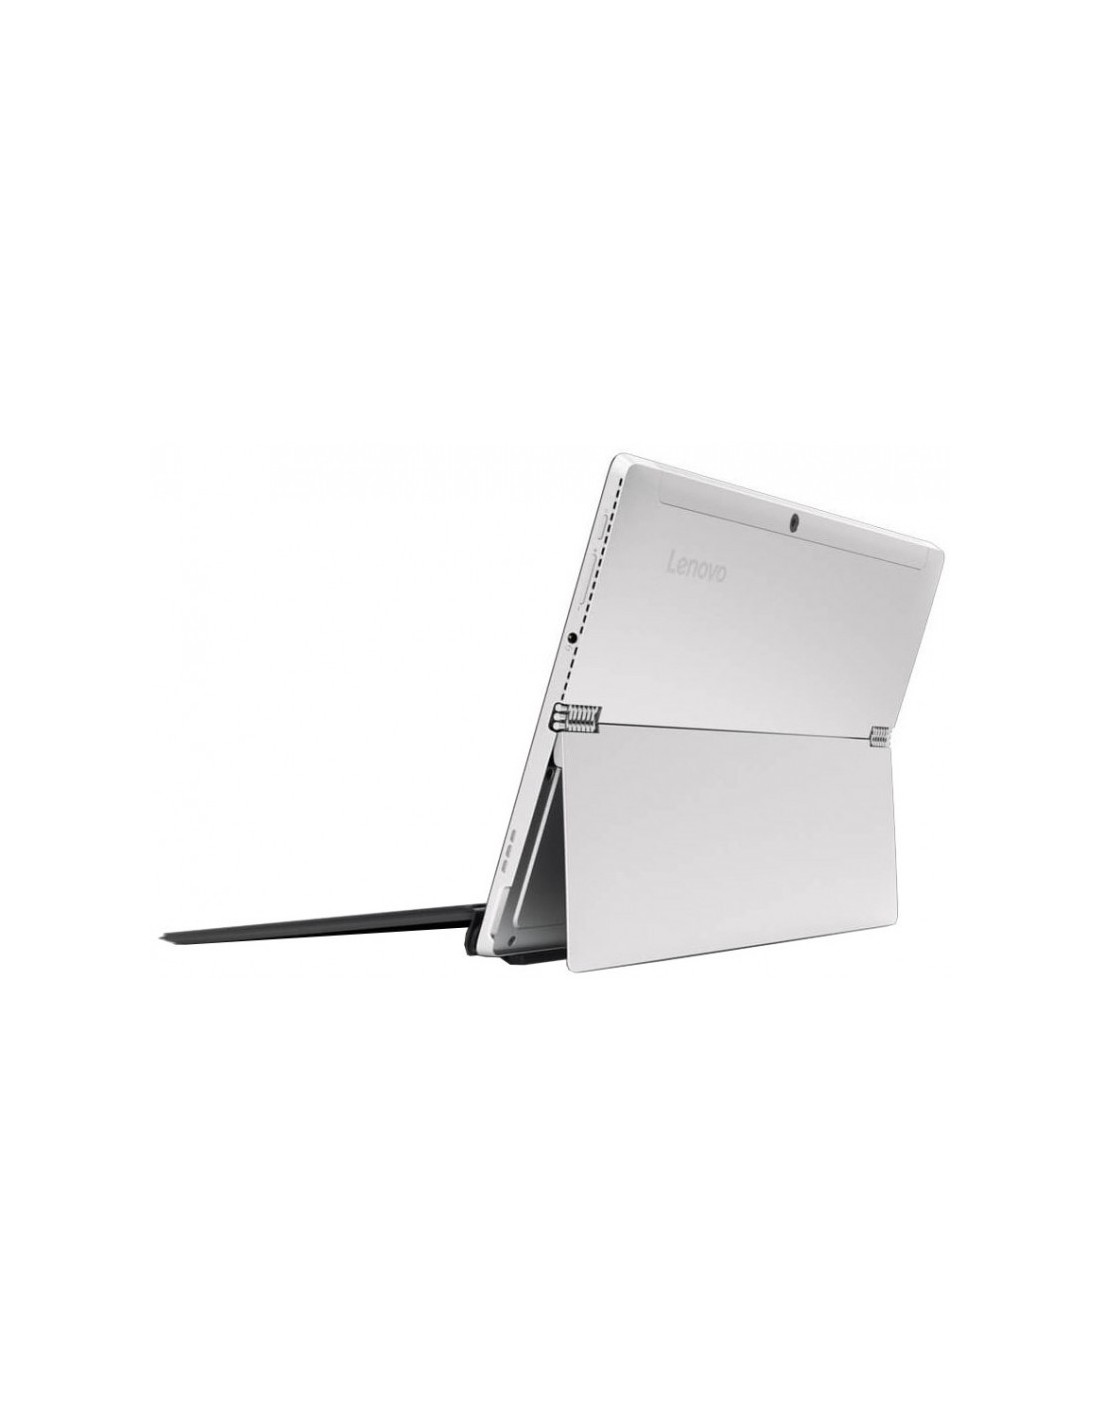 Pc Portable / Tablette Lenovo Miix 520 / i5 8è Gén / 8 Go / 256 Go SSD +  Stylet